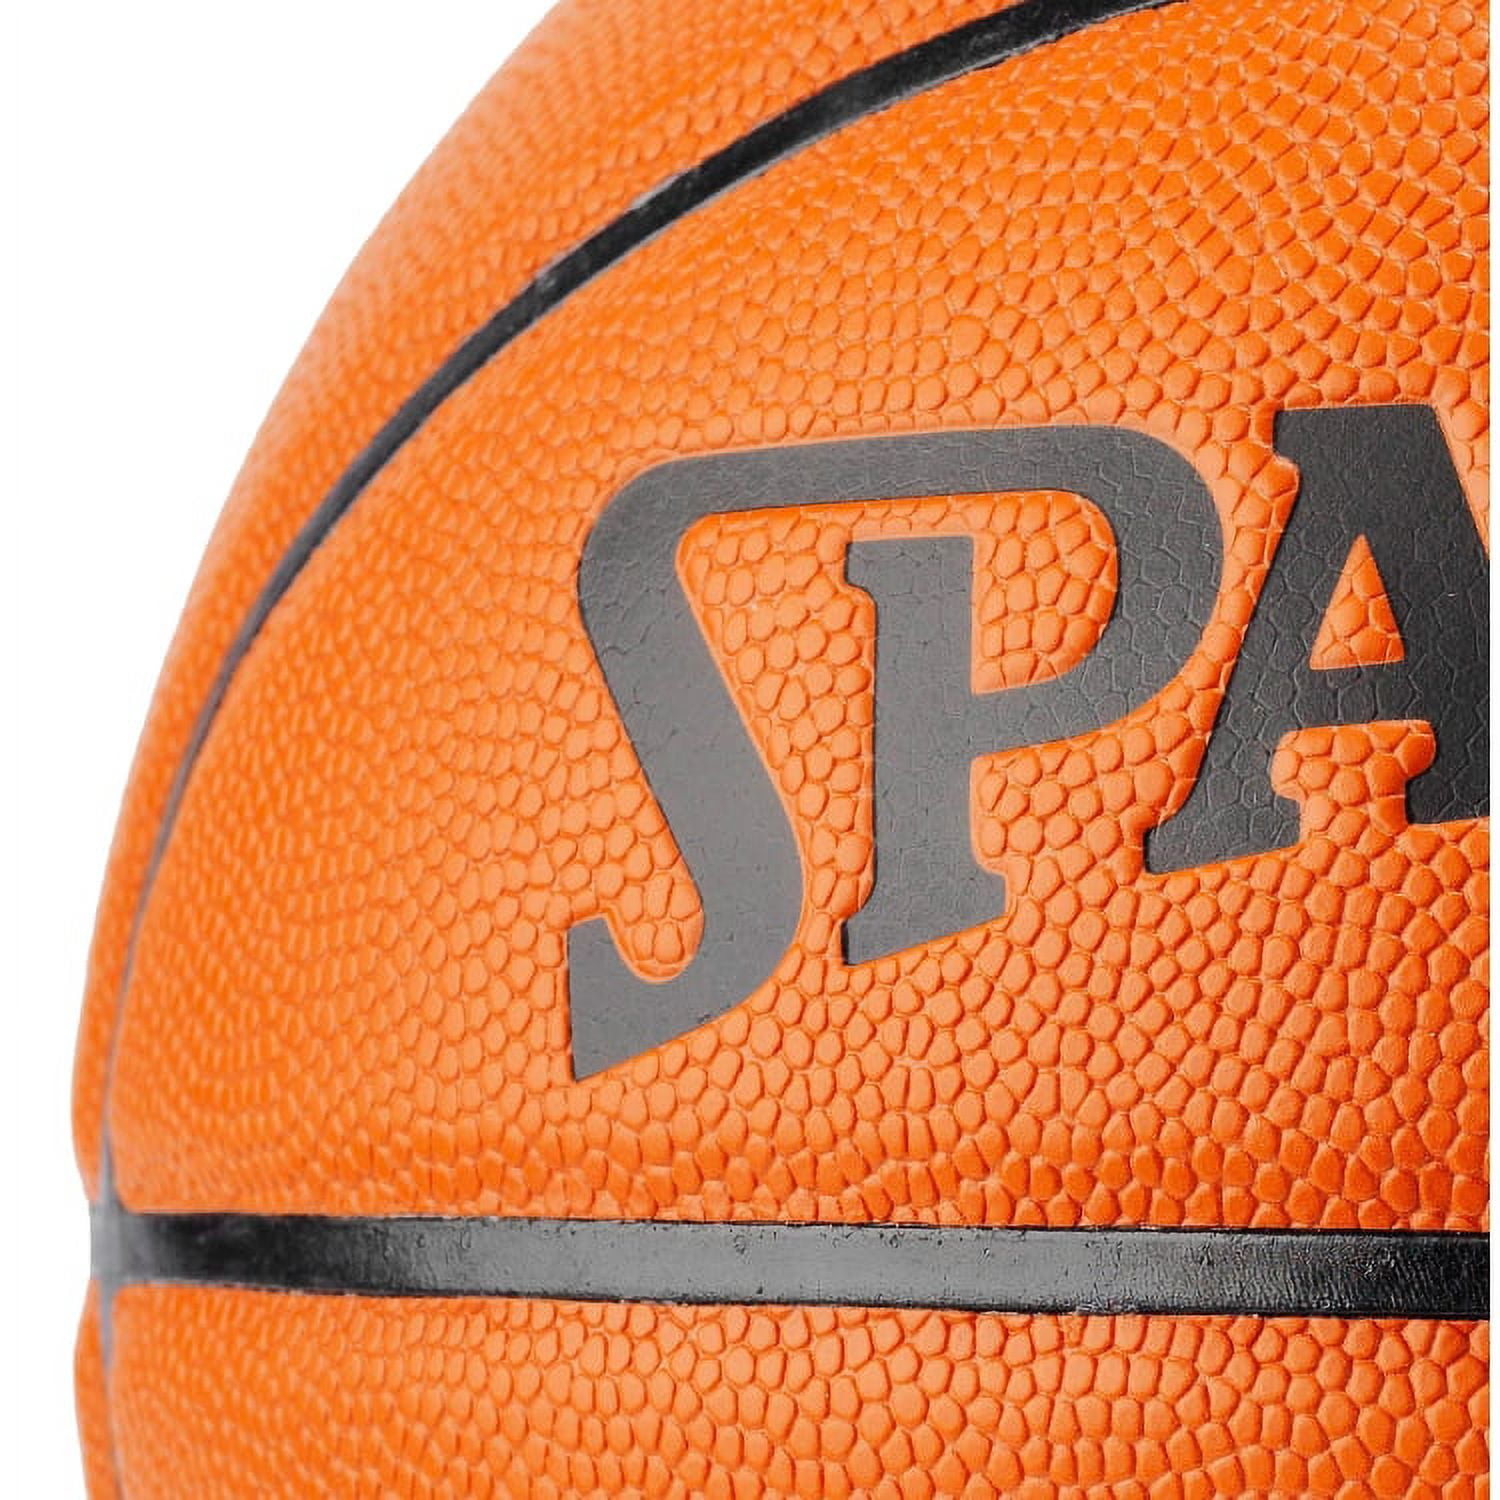 NBA Jersey Clearance Sale,Spalding NBA Replica Basketball,Kyle